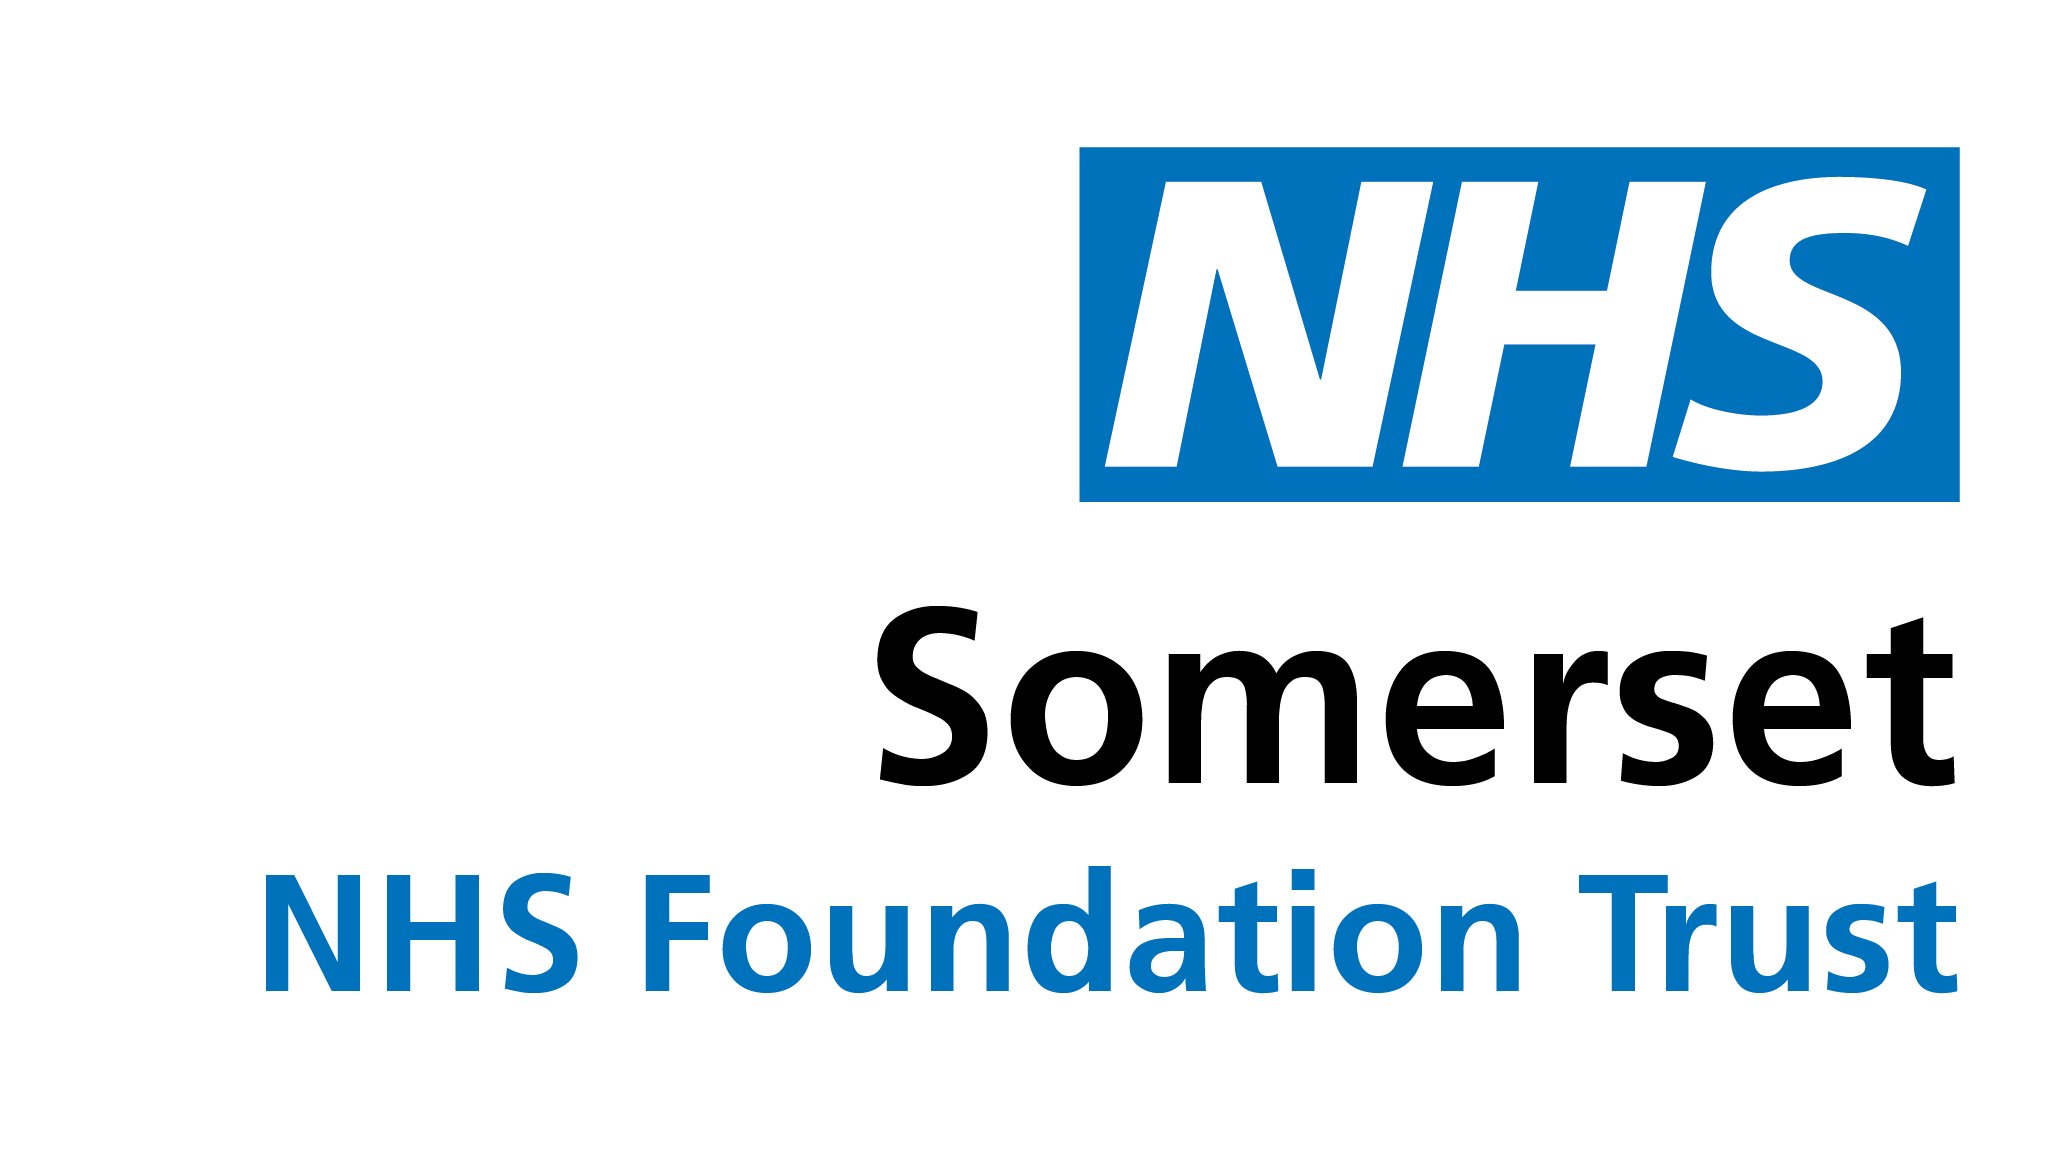 Somerset NHS Foundation Trust